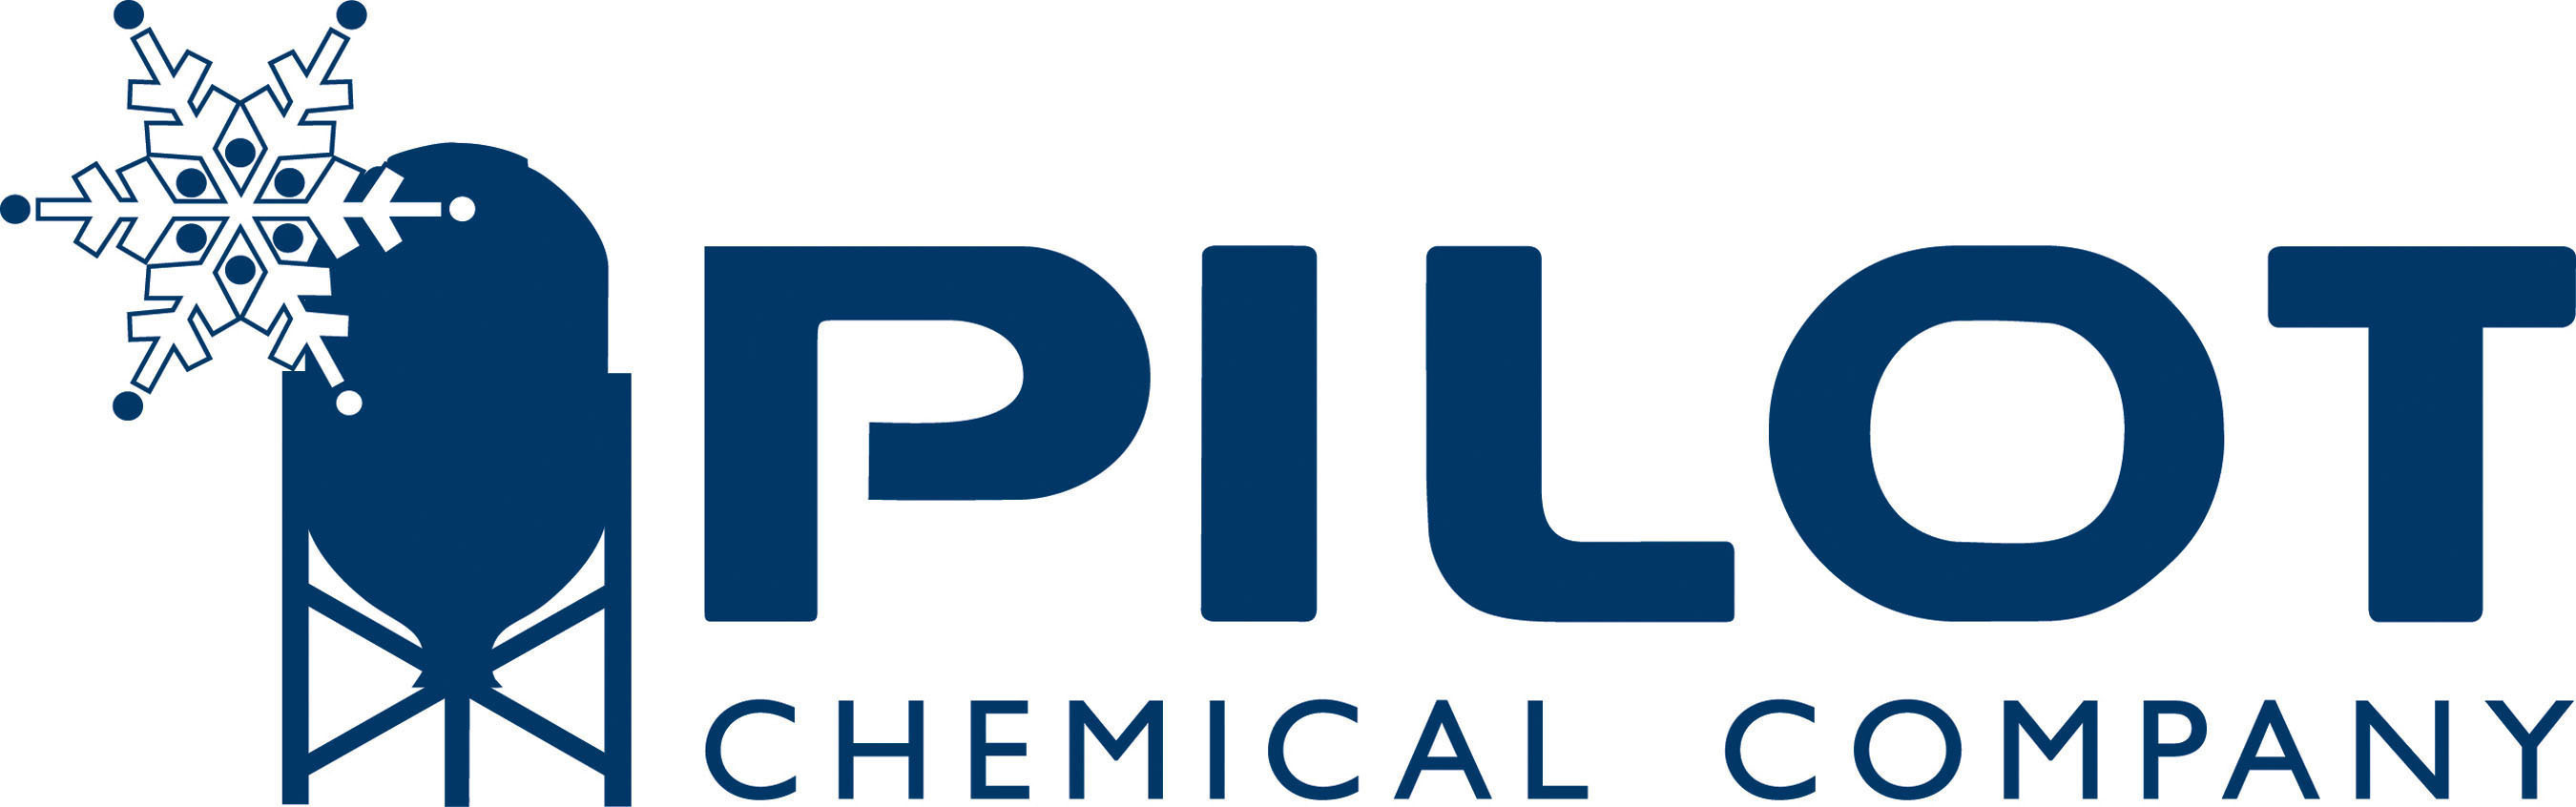 Pilot Chemical Company, www.pilotchemical.com.